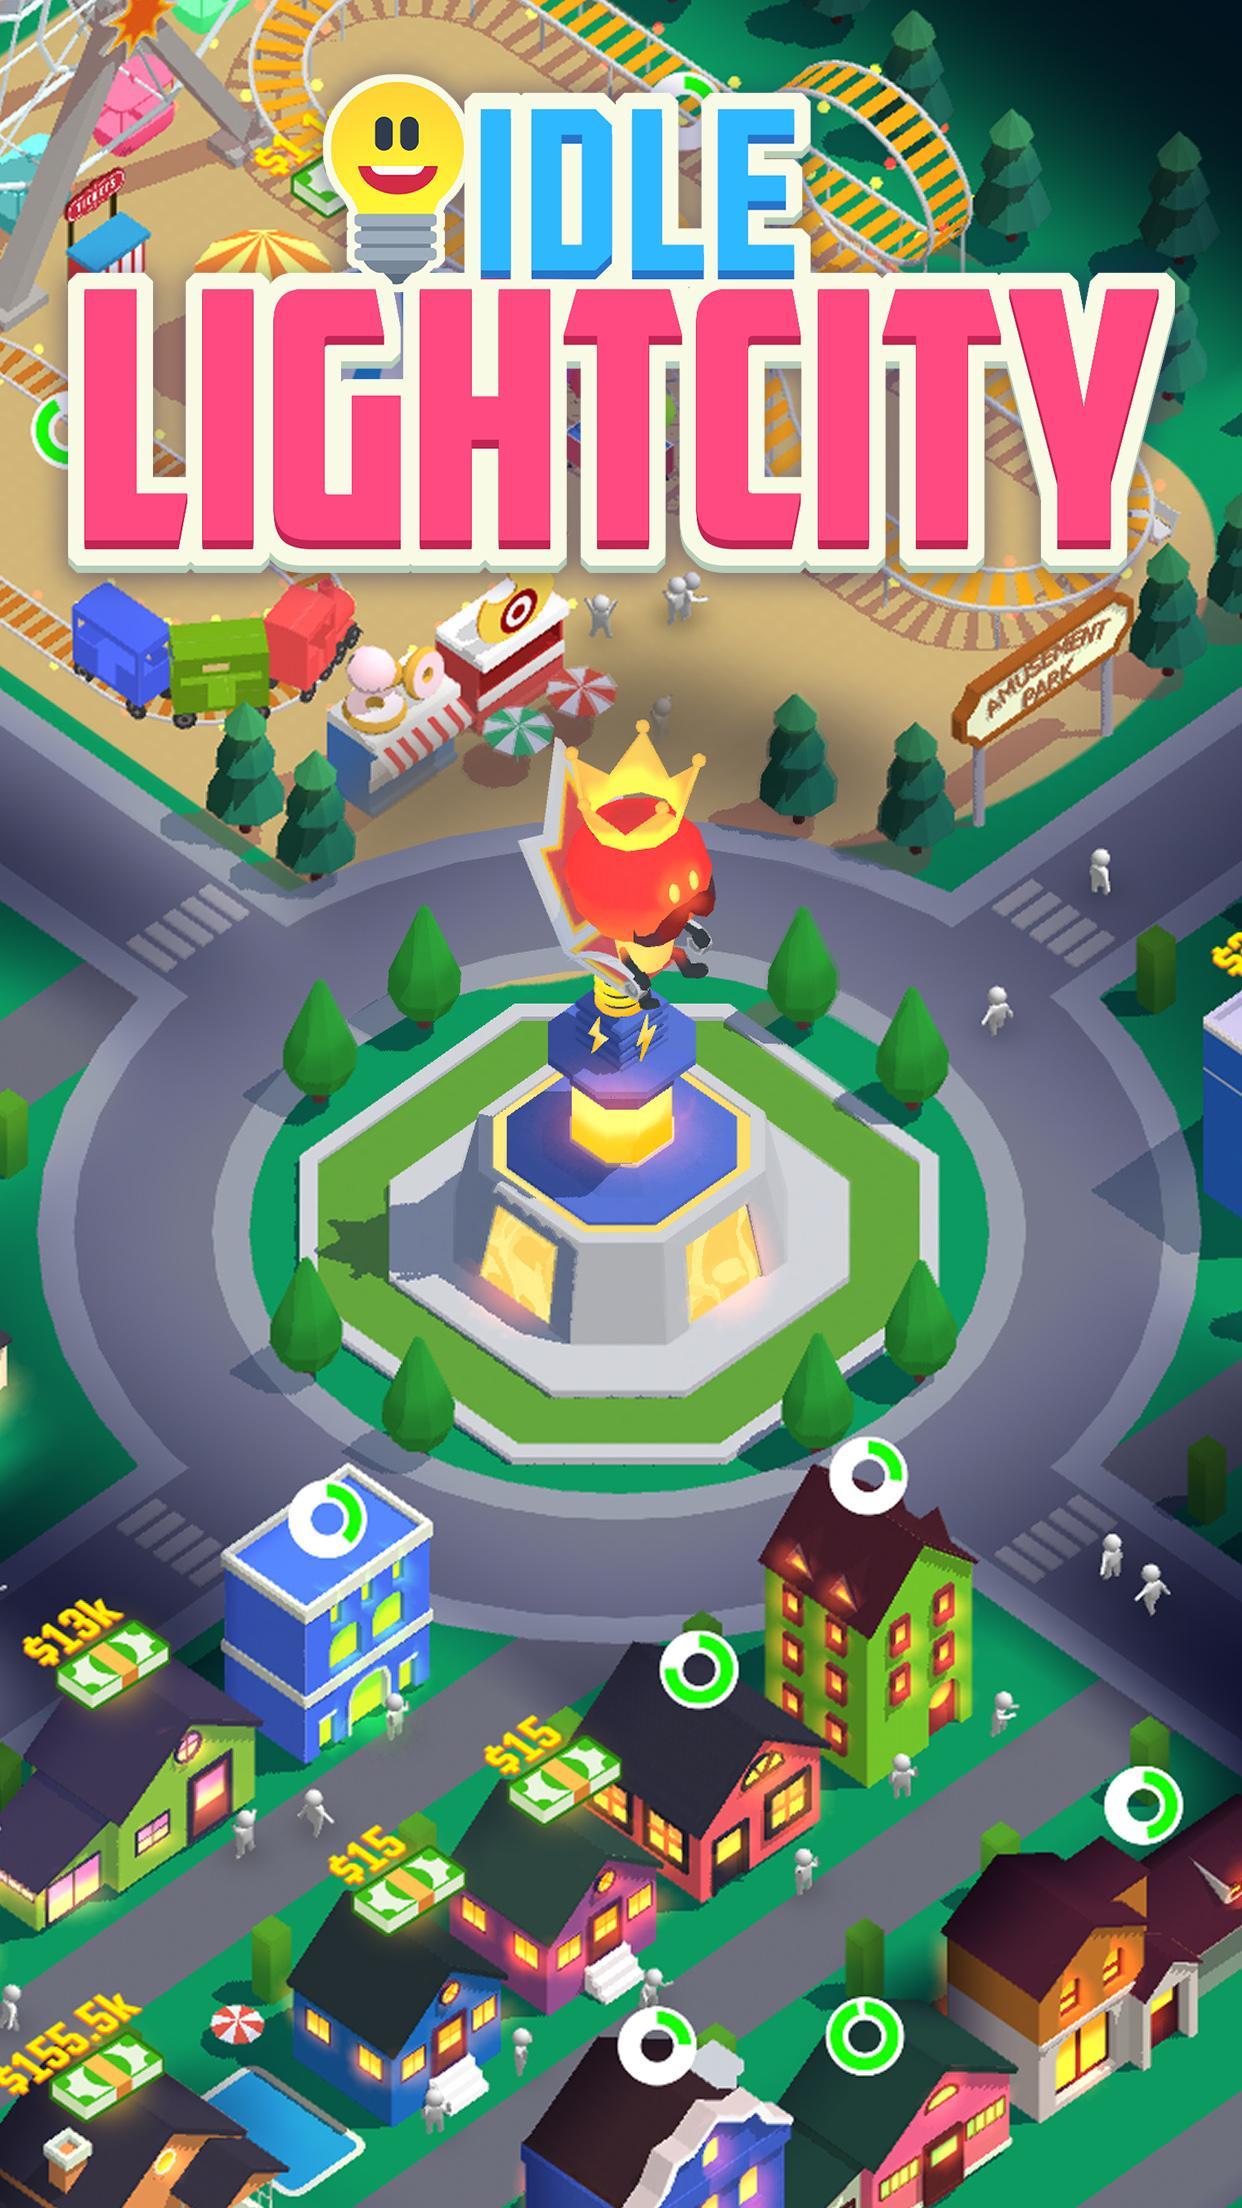 Screenshot 1 of Idle Light City gioco clicker 3.0.6